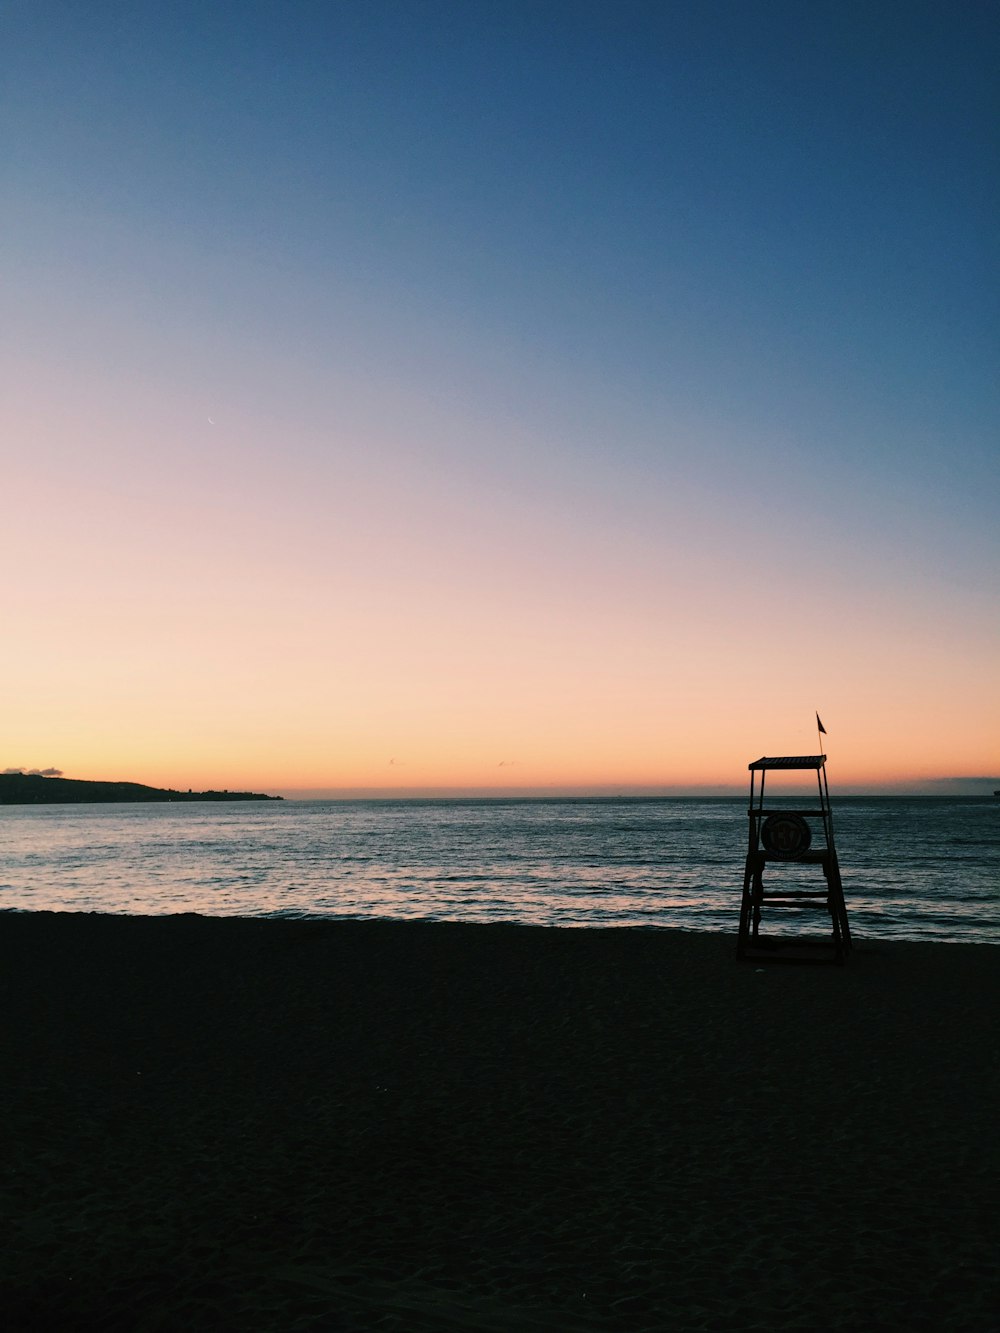 a lifeguard chair on a beach at sunset